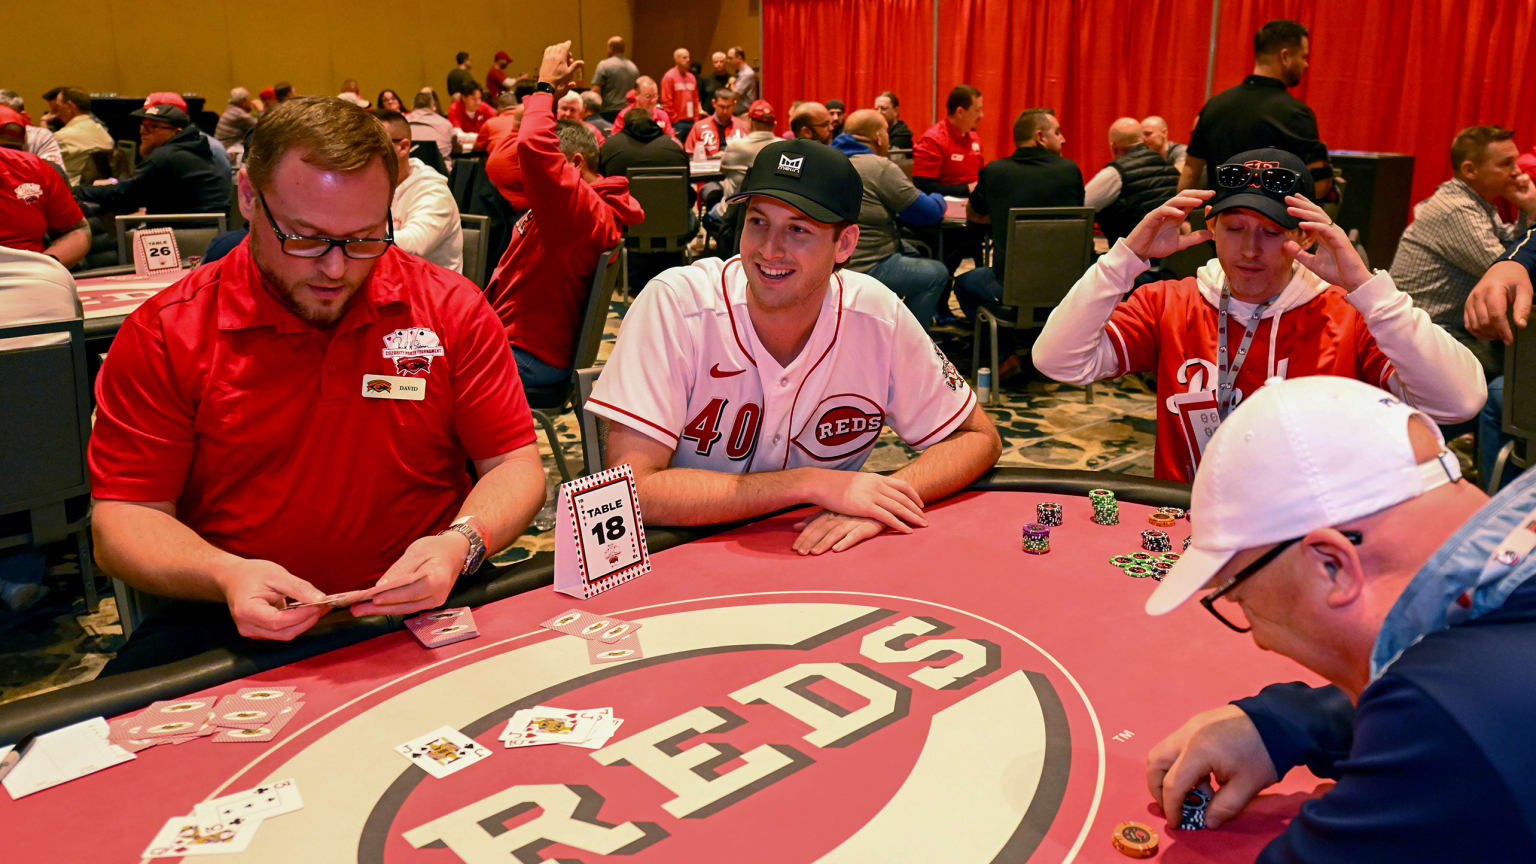 Reds Community Fund Celebrity Poker Tournament